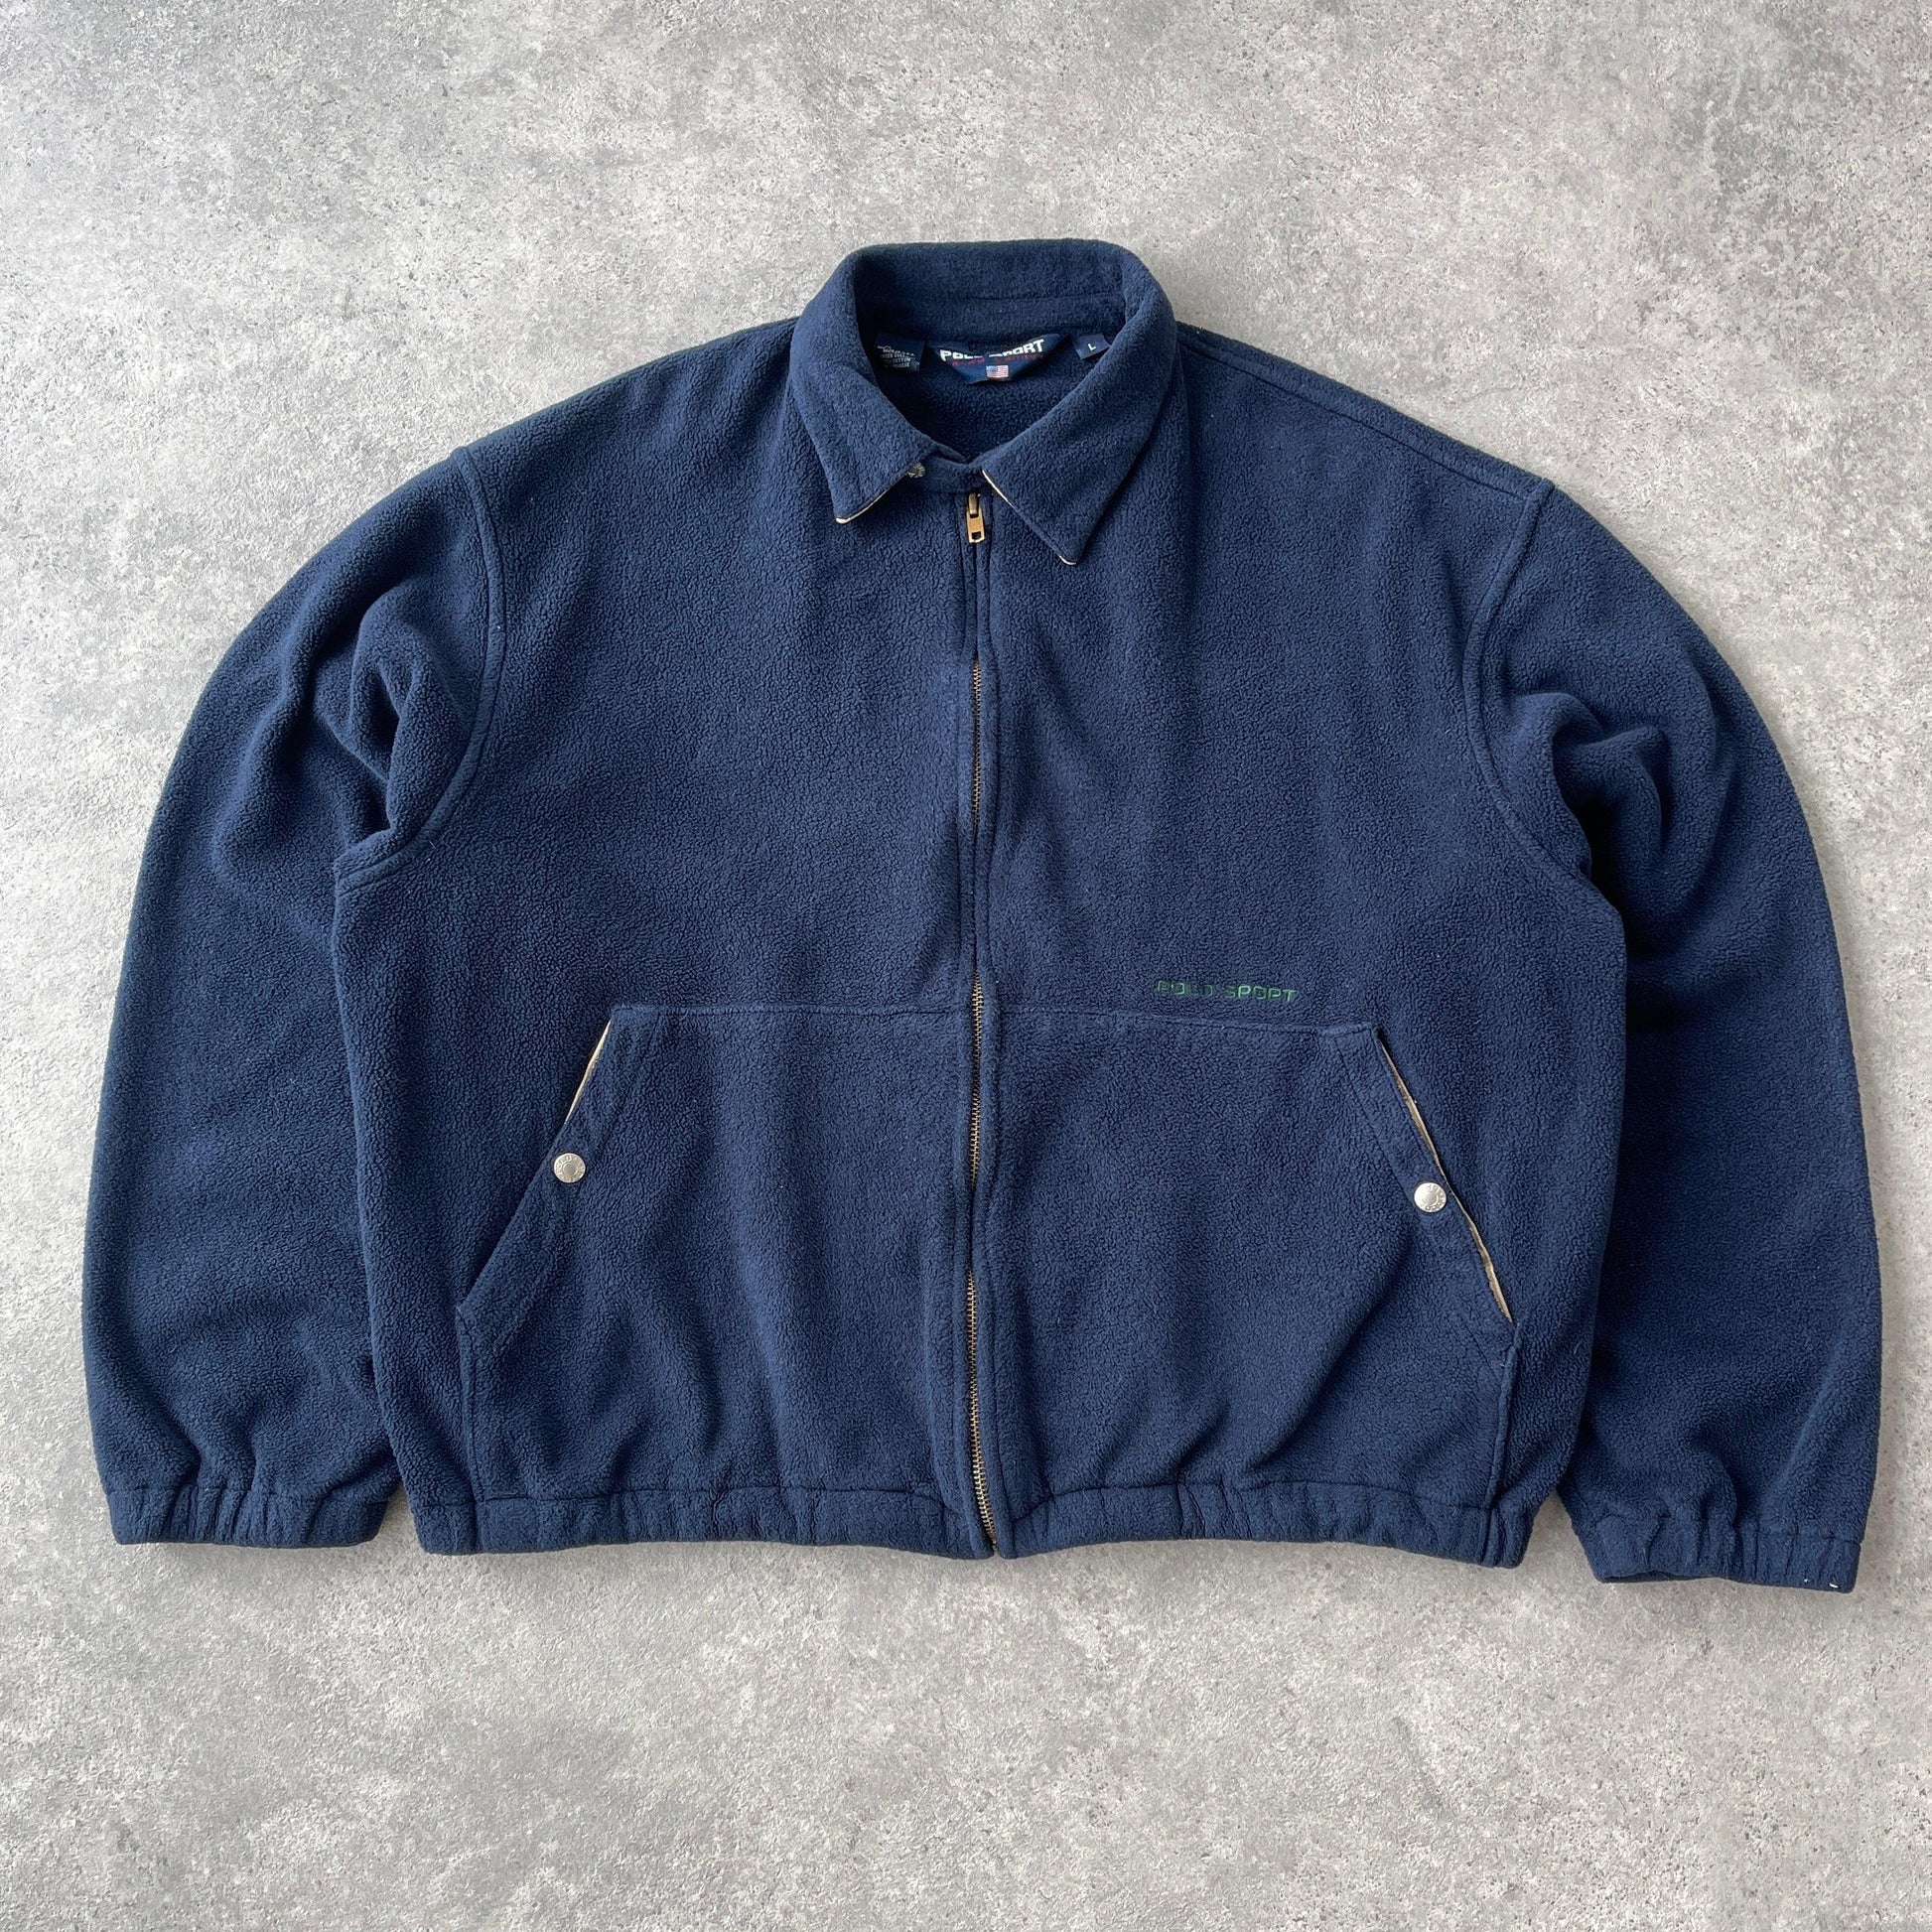 Polo Sport Ralph Lauren 1990s heavyweight fleece harrington jacket (L) - Known Source